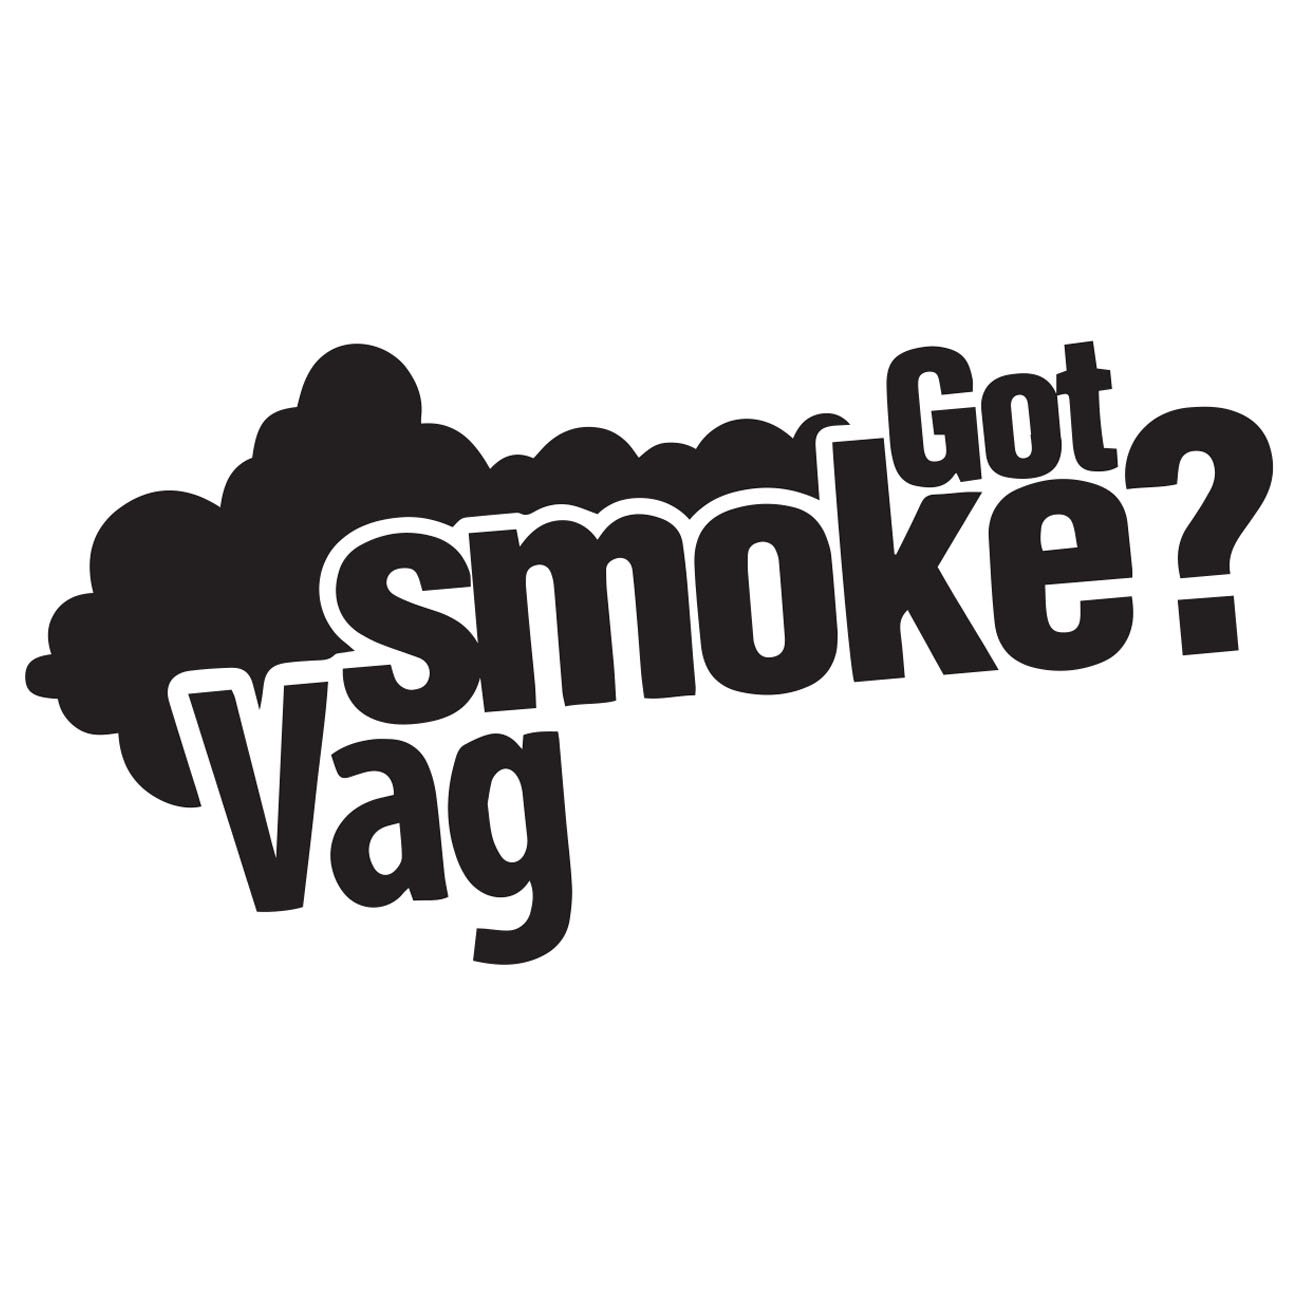 Got smoke - VAG